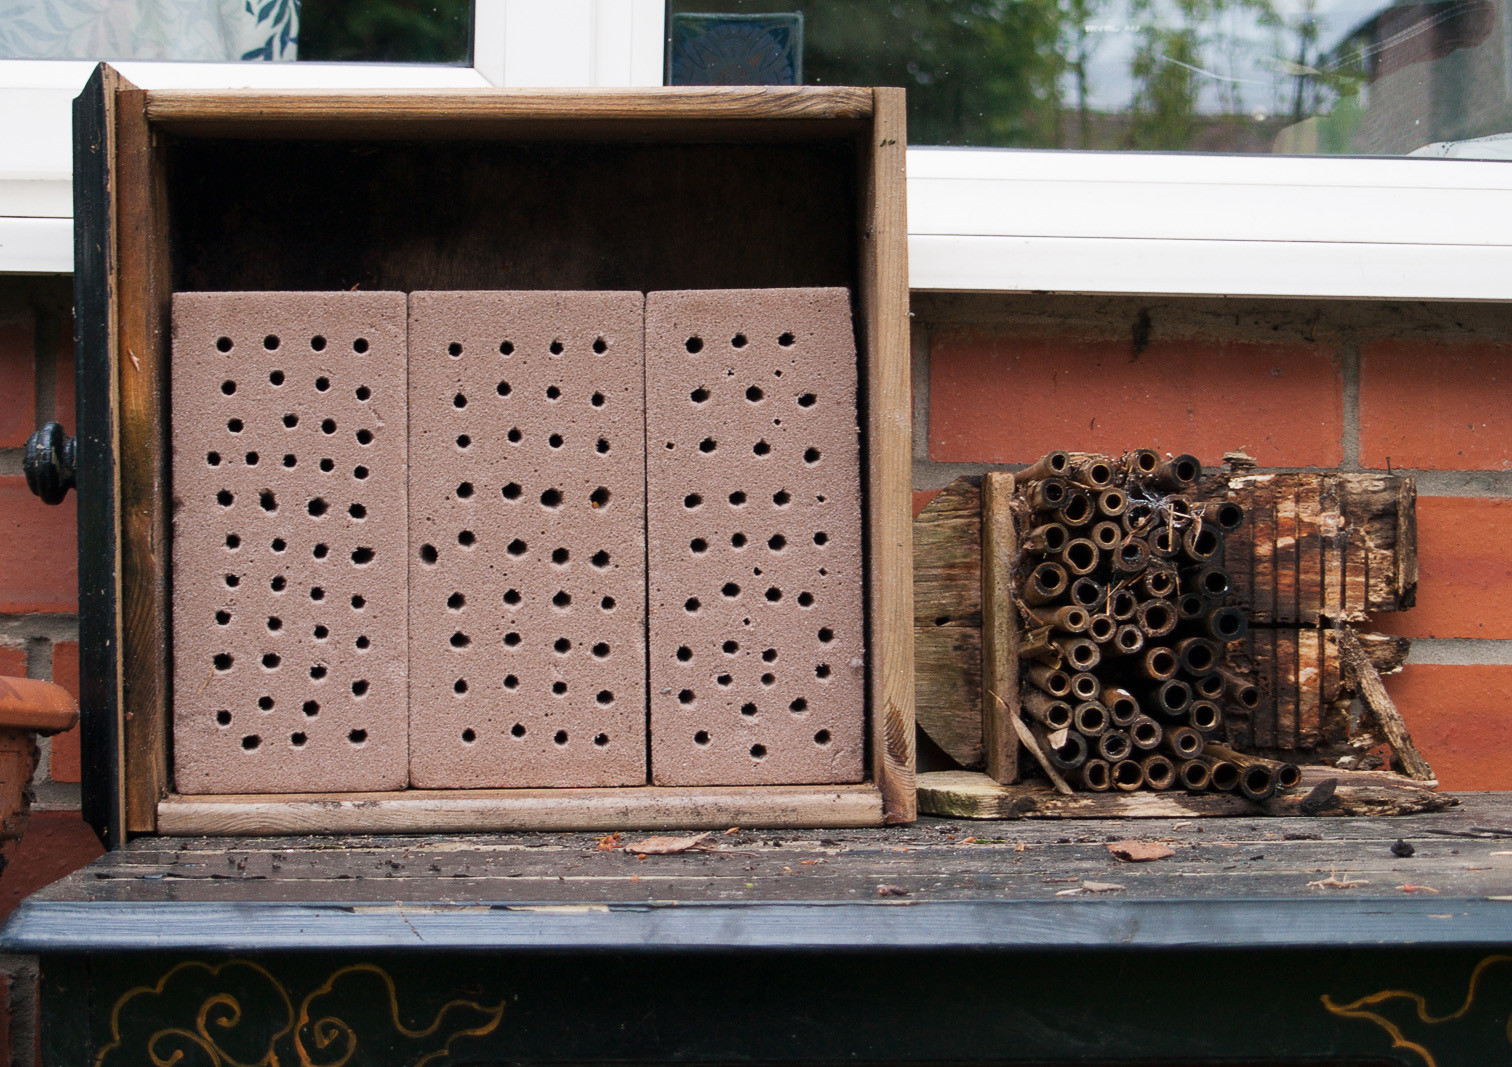 Best ideas about DIY Mason Bee House
. Save or Pin Garden65 Mason Bee House I Do DIY Now.